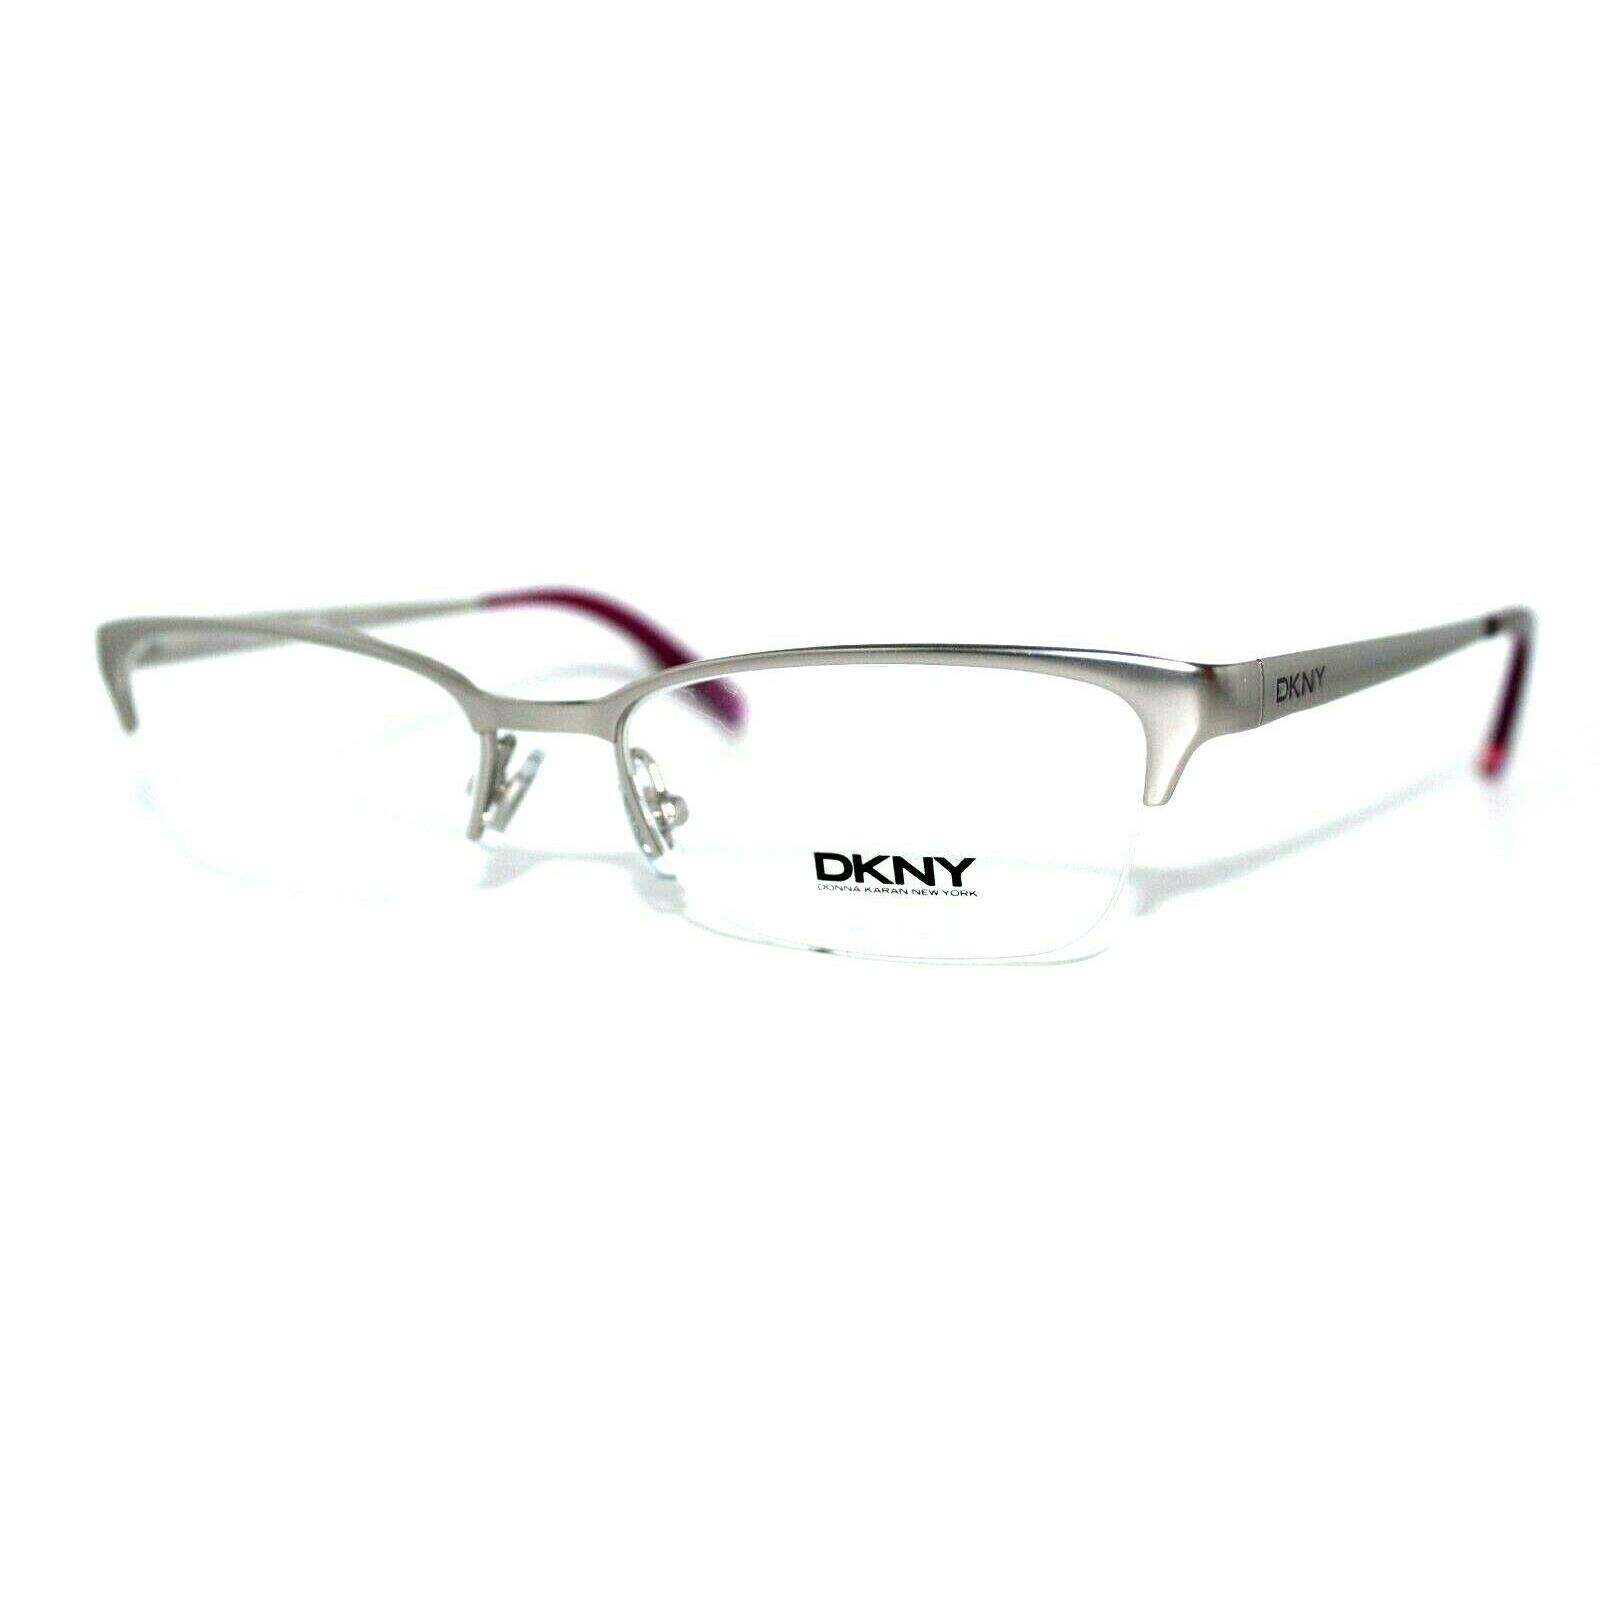 Dkny DY5627 1029 Silver Eyeglasses Donna Karan Frames 51MM RX